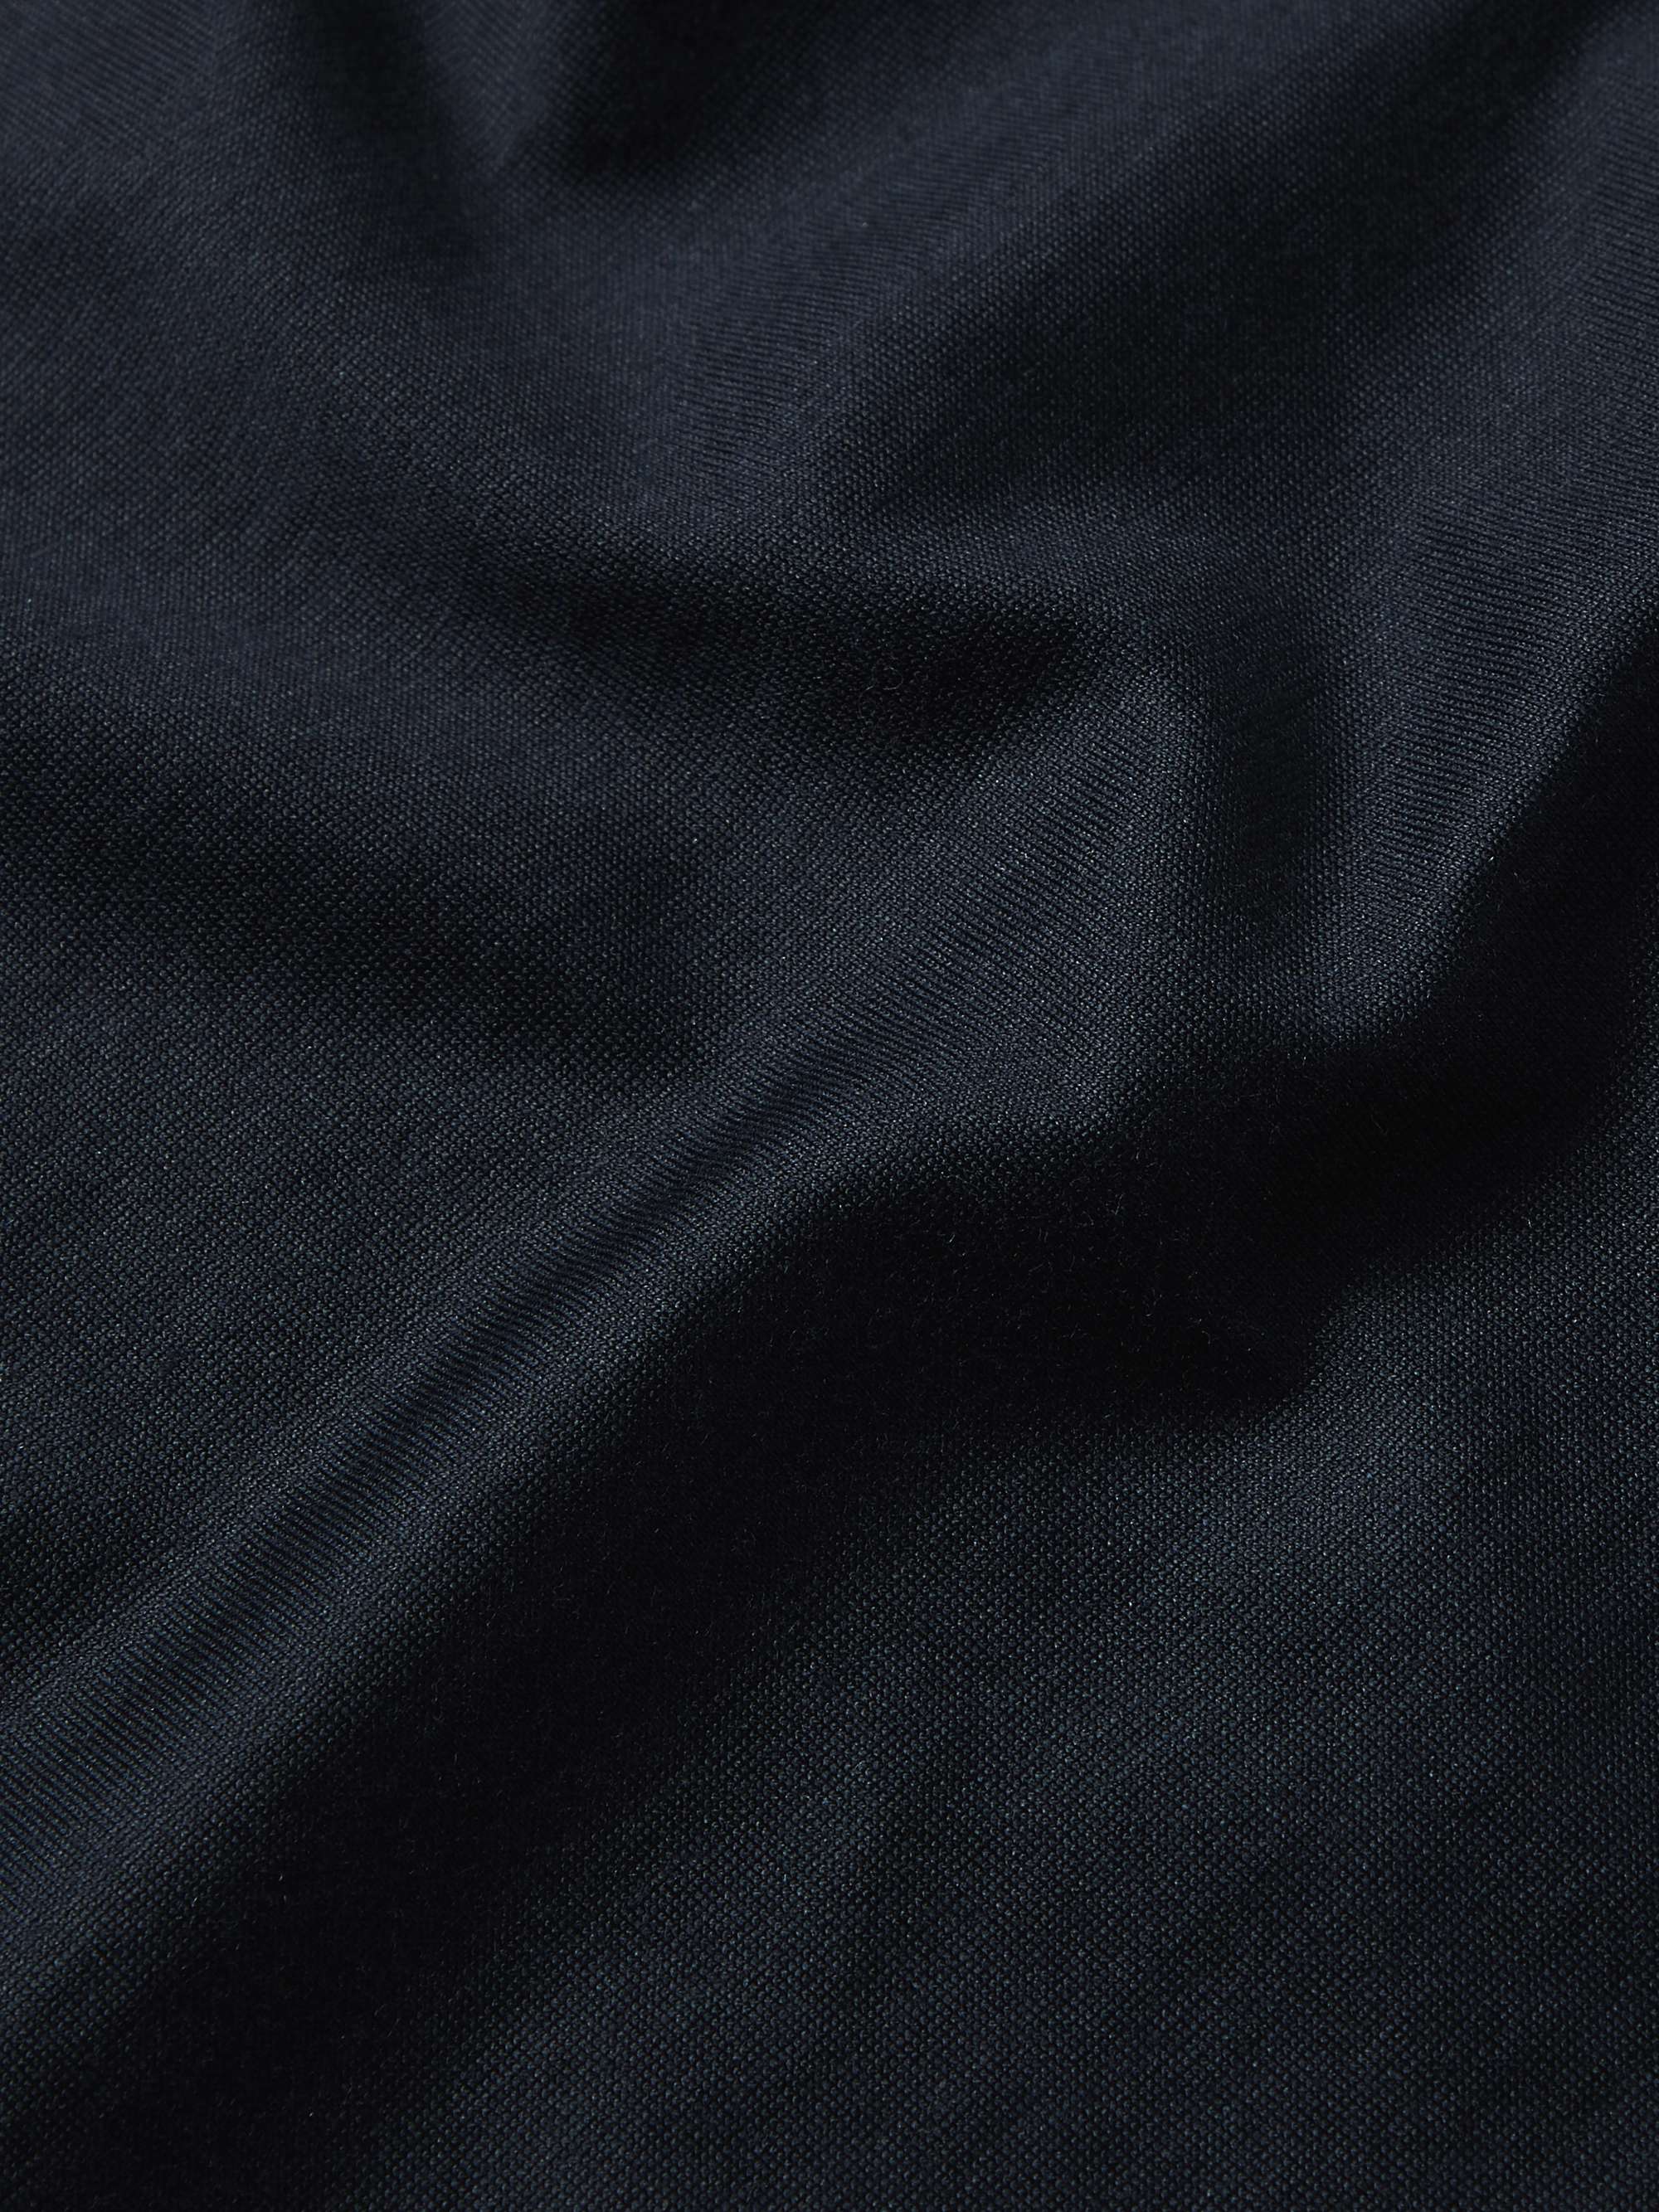 GIORGIO ARMANI Slim-Fit Silk and Cotton-Blend Polo Shirt